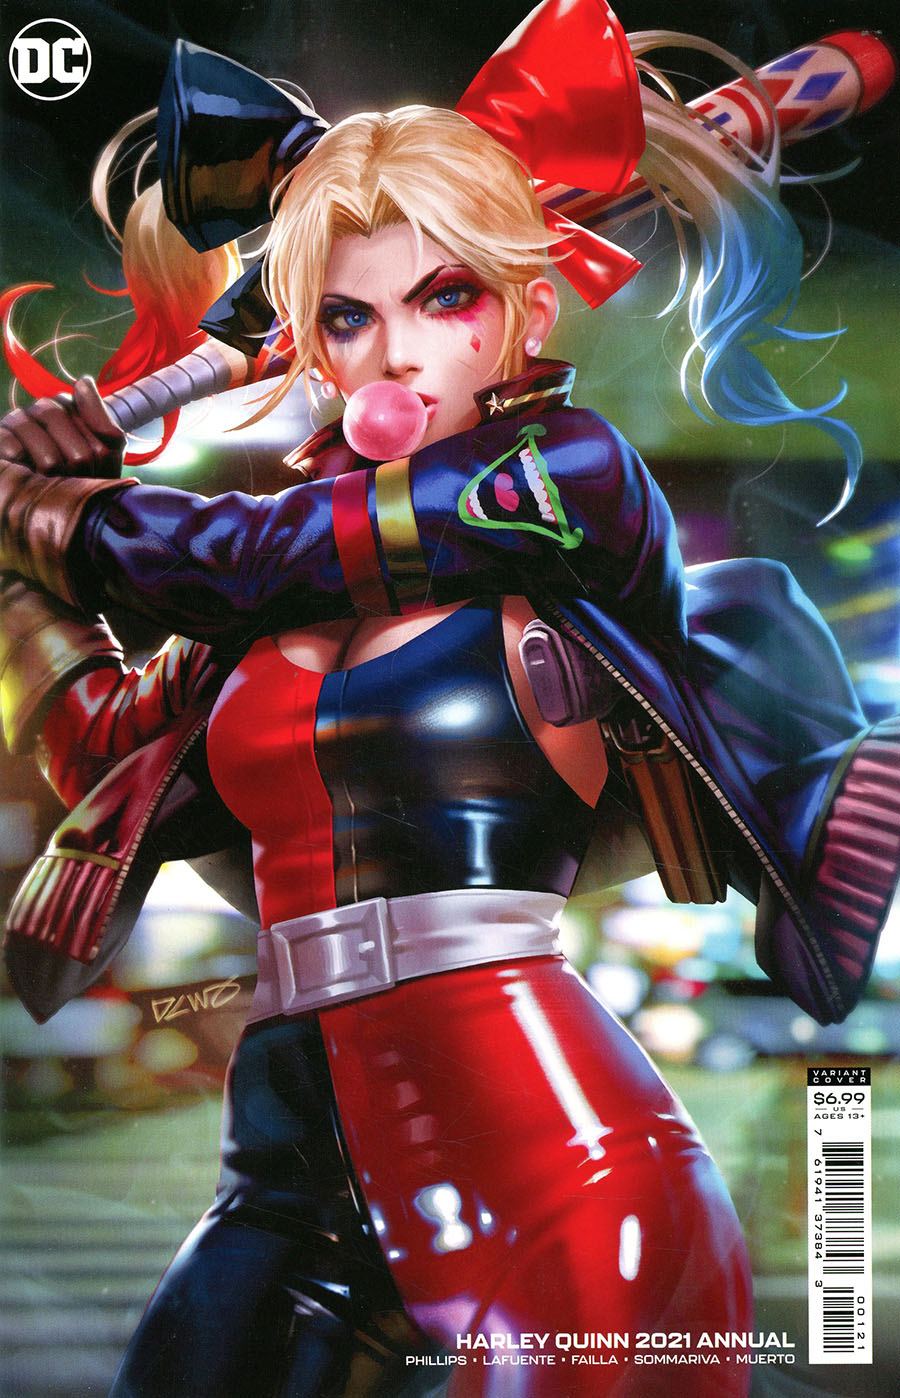 Harley Quinn Vol 4 2021 Annual #1 Cover B Variant Derrick Chew Card Stock Cover